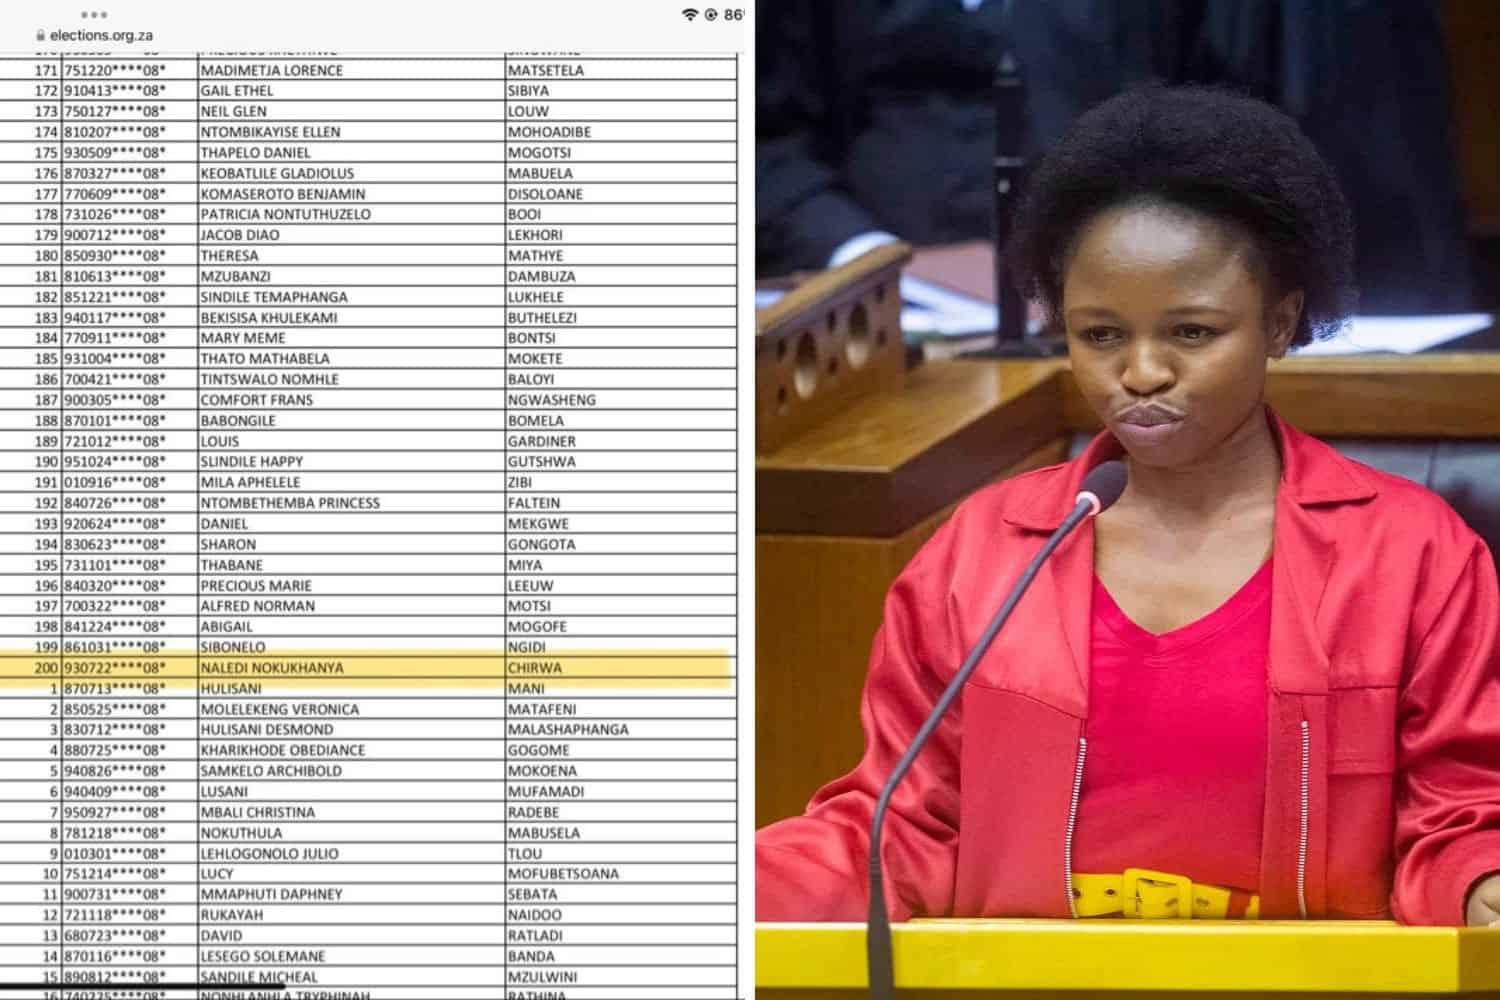 Social media reacts to Naledi Chirwa’s demotion to bottom of EFF list